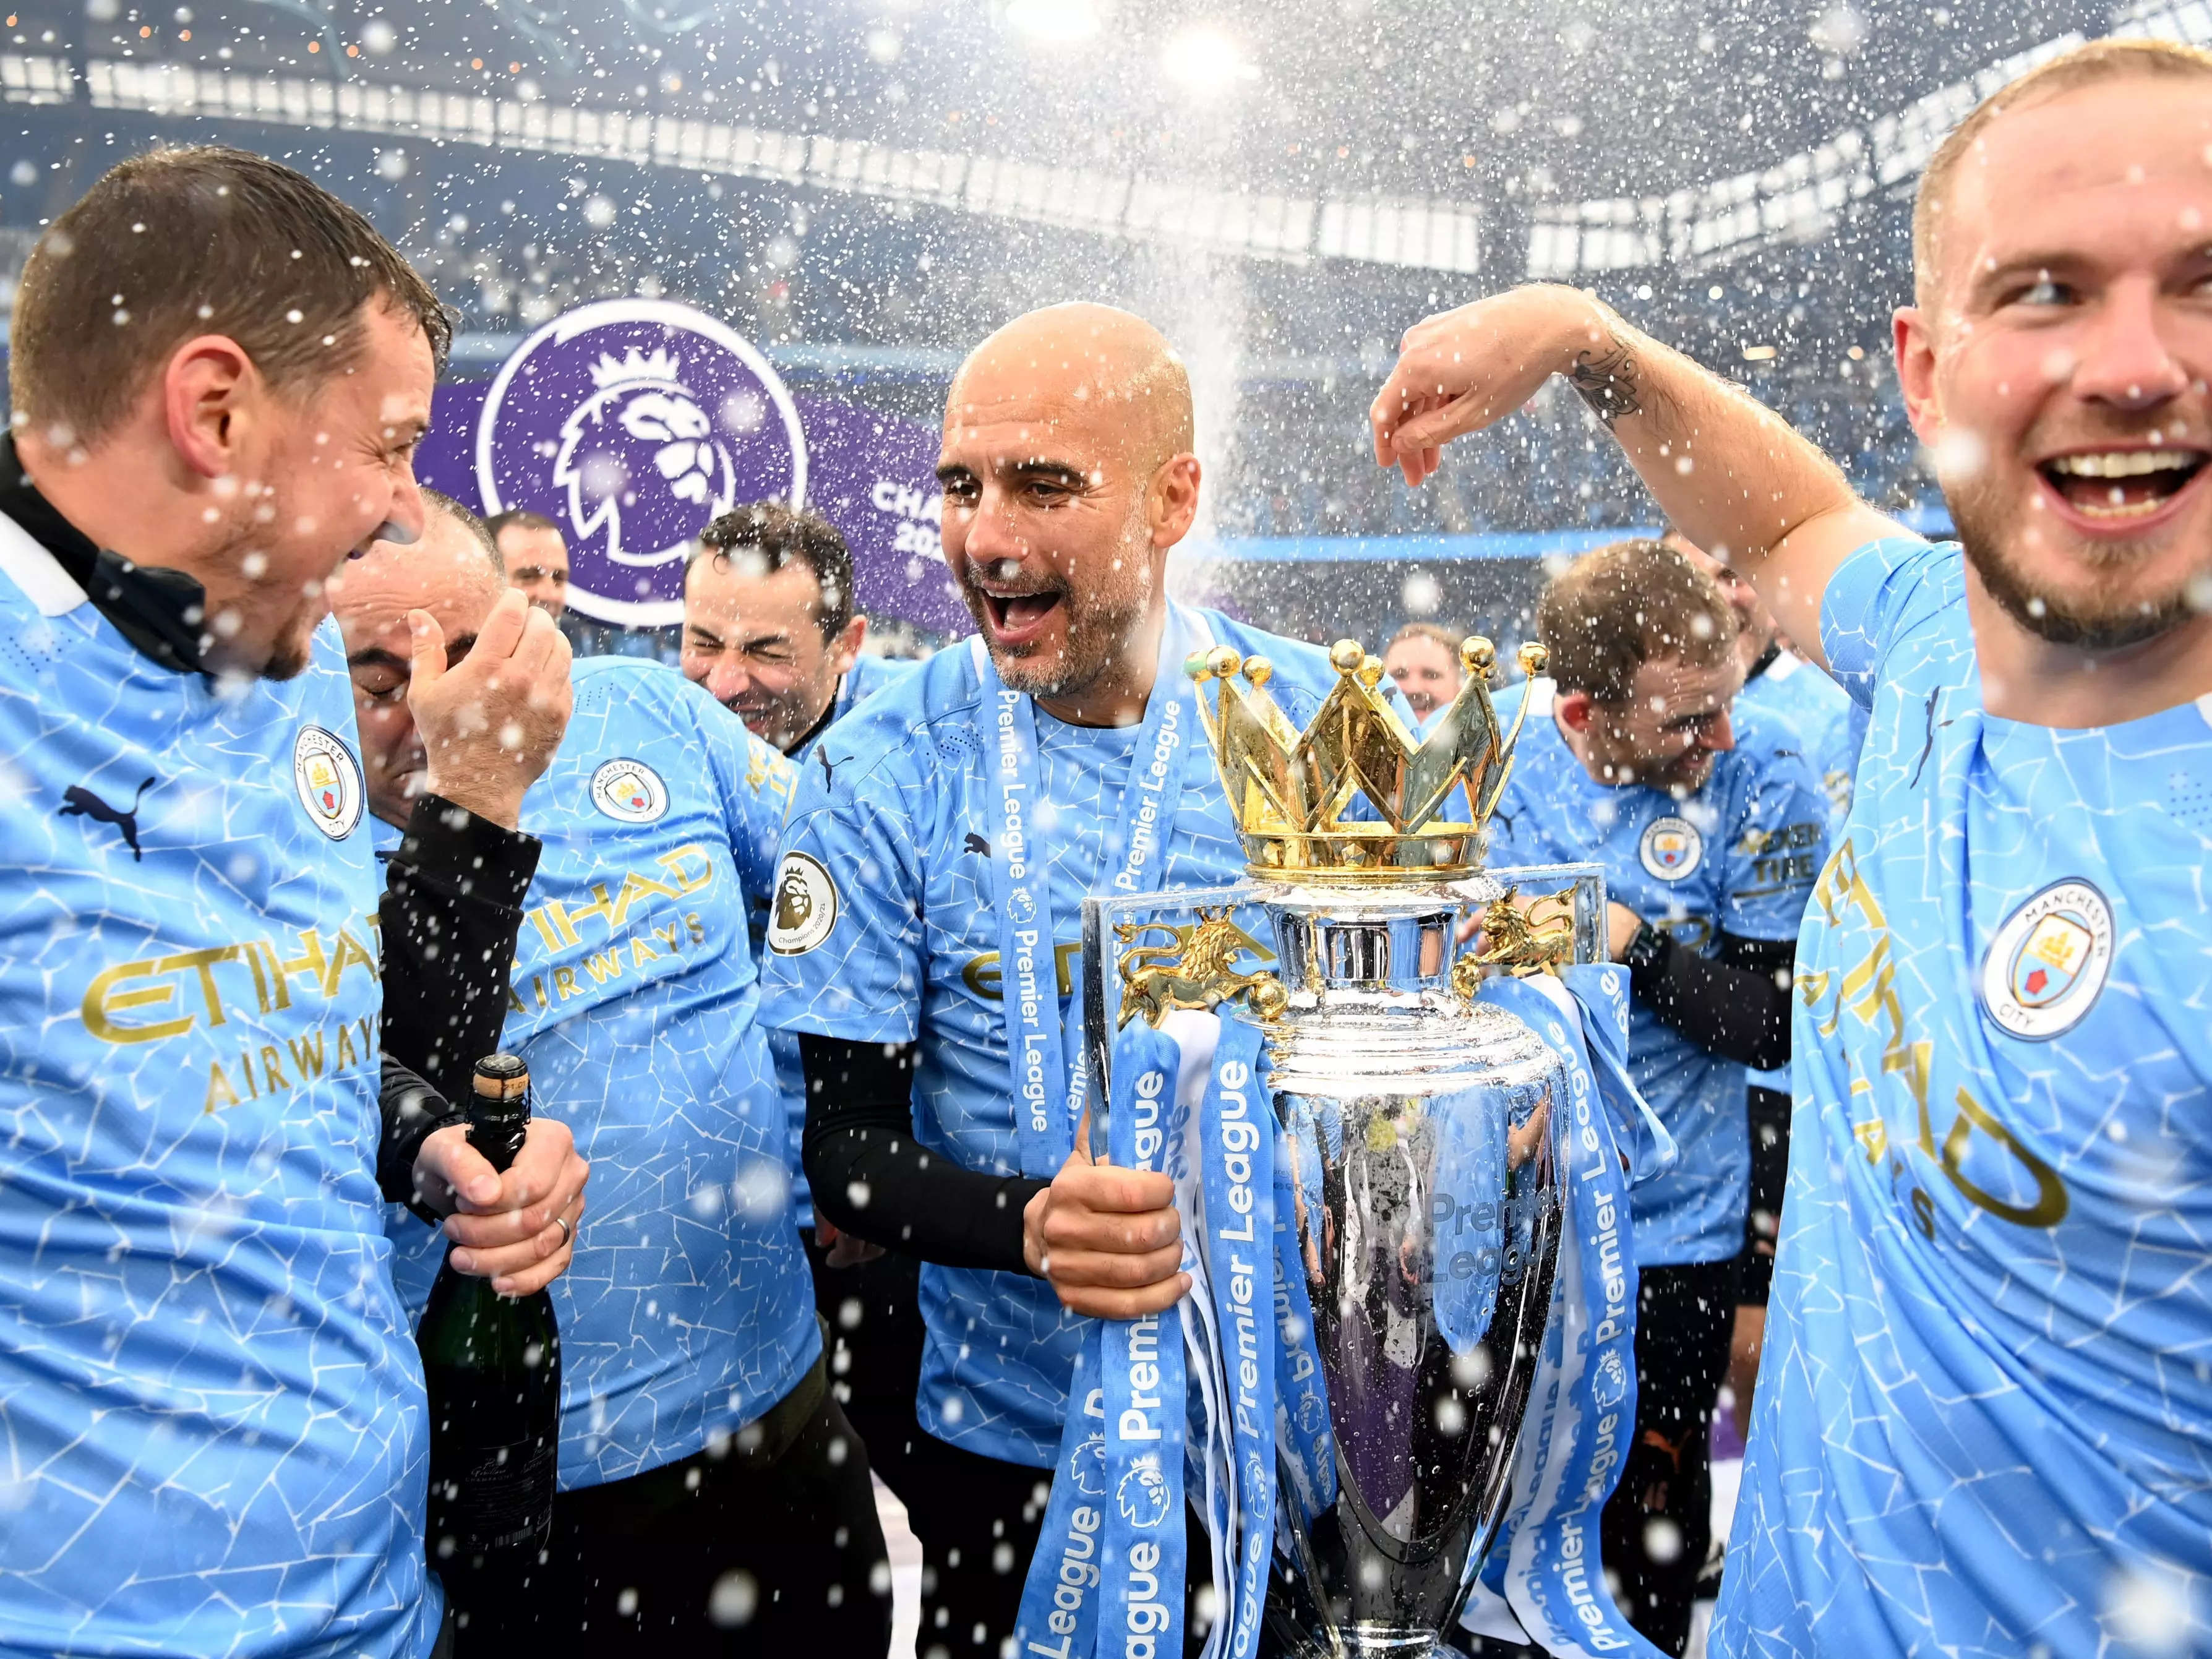 Pep Guardiola celebrates winning the Premier League